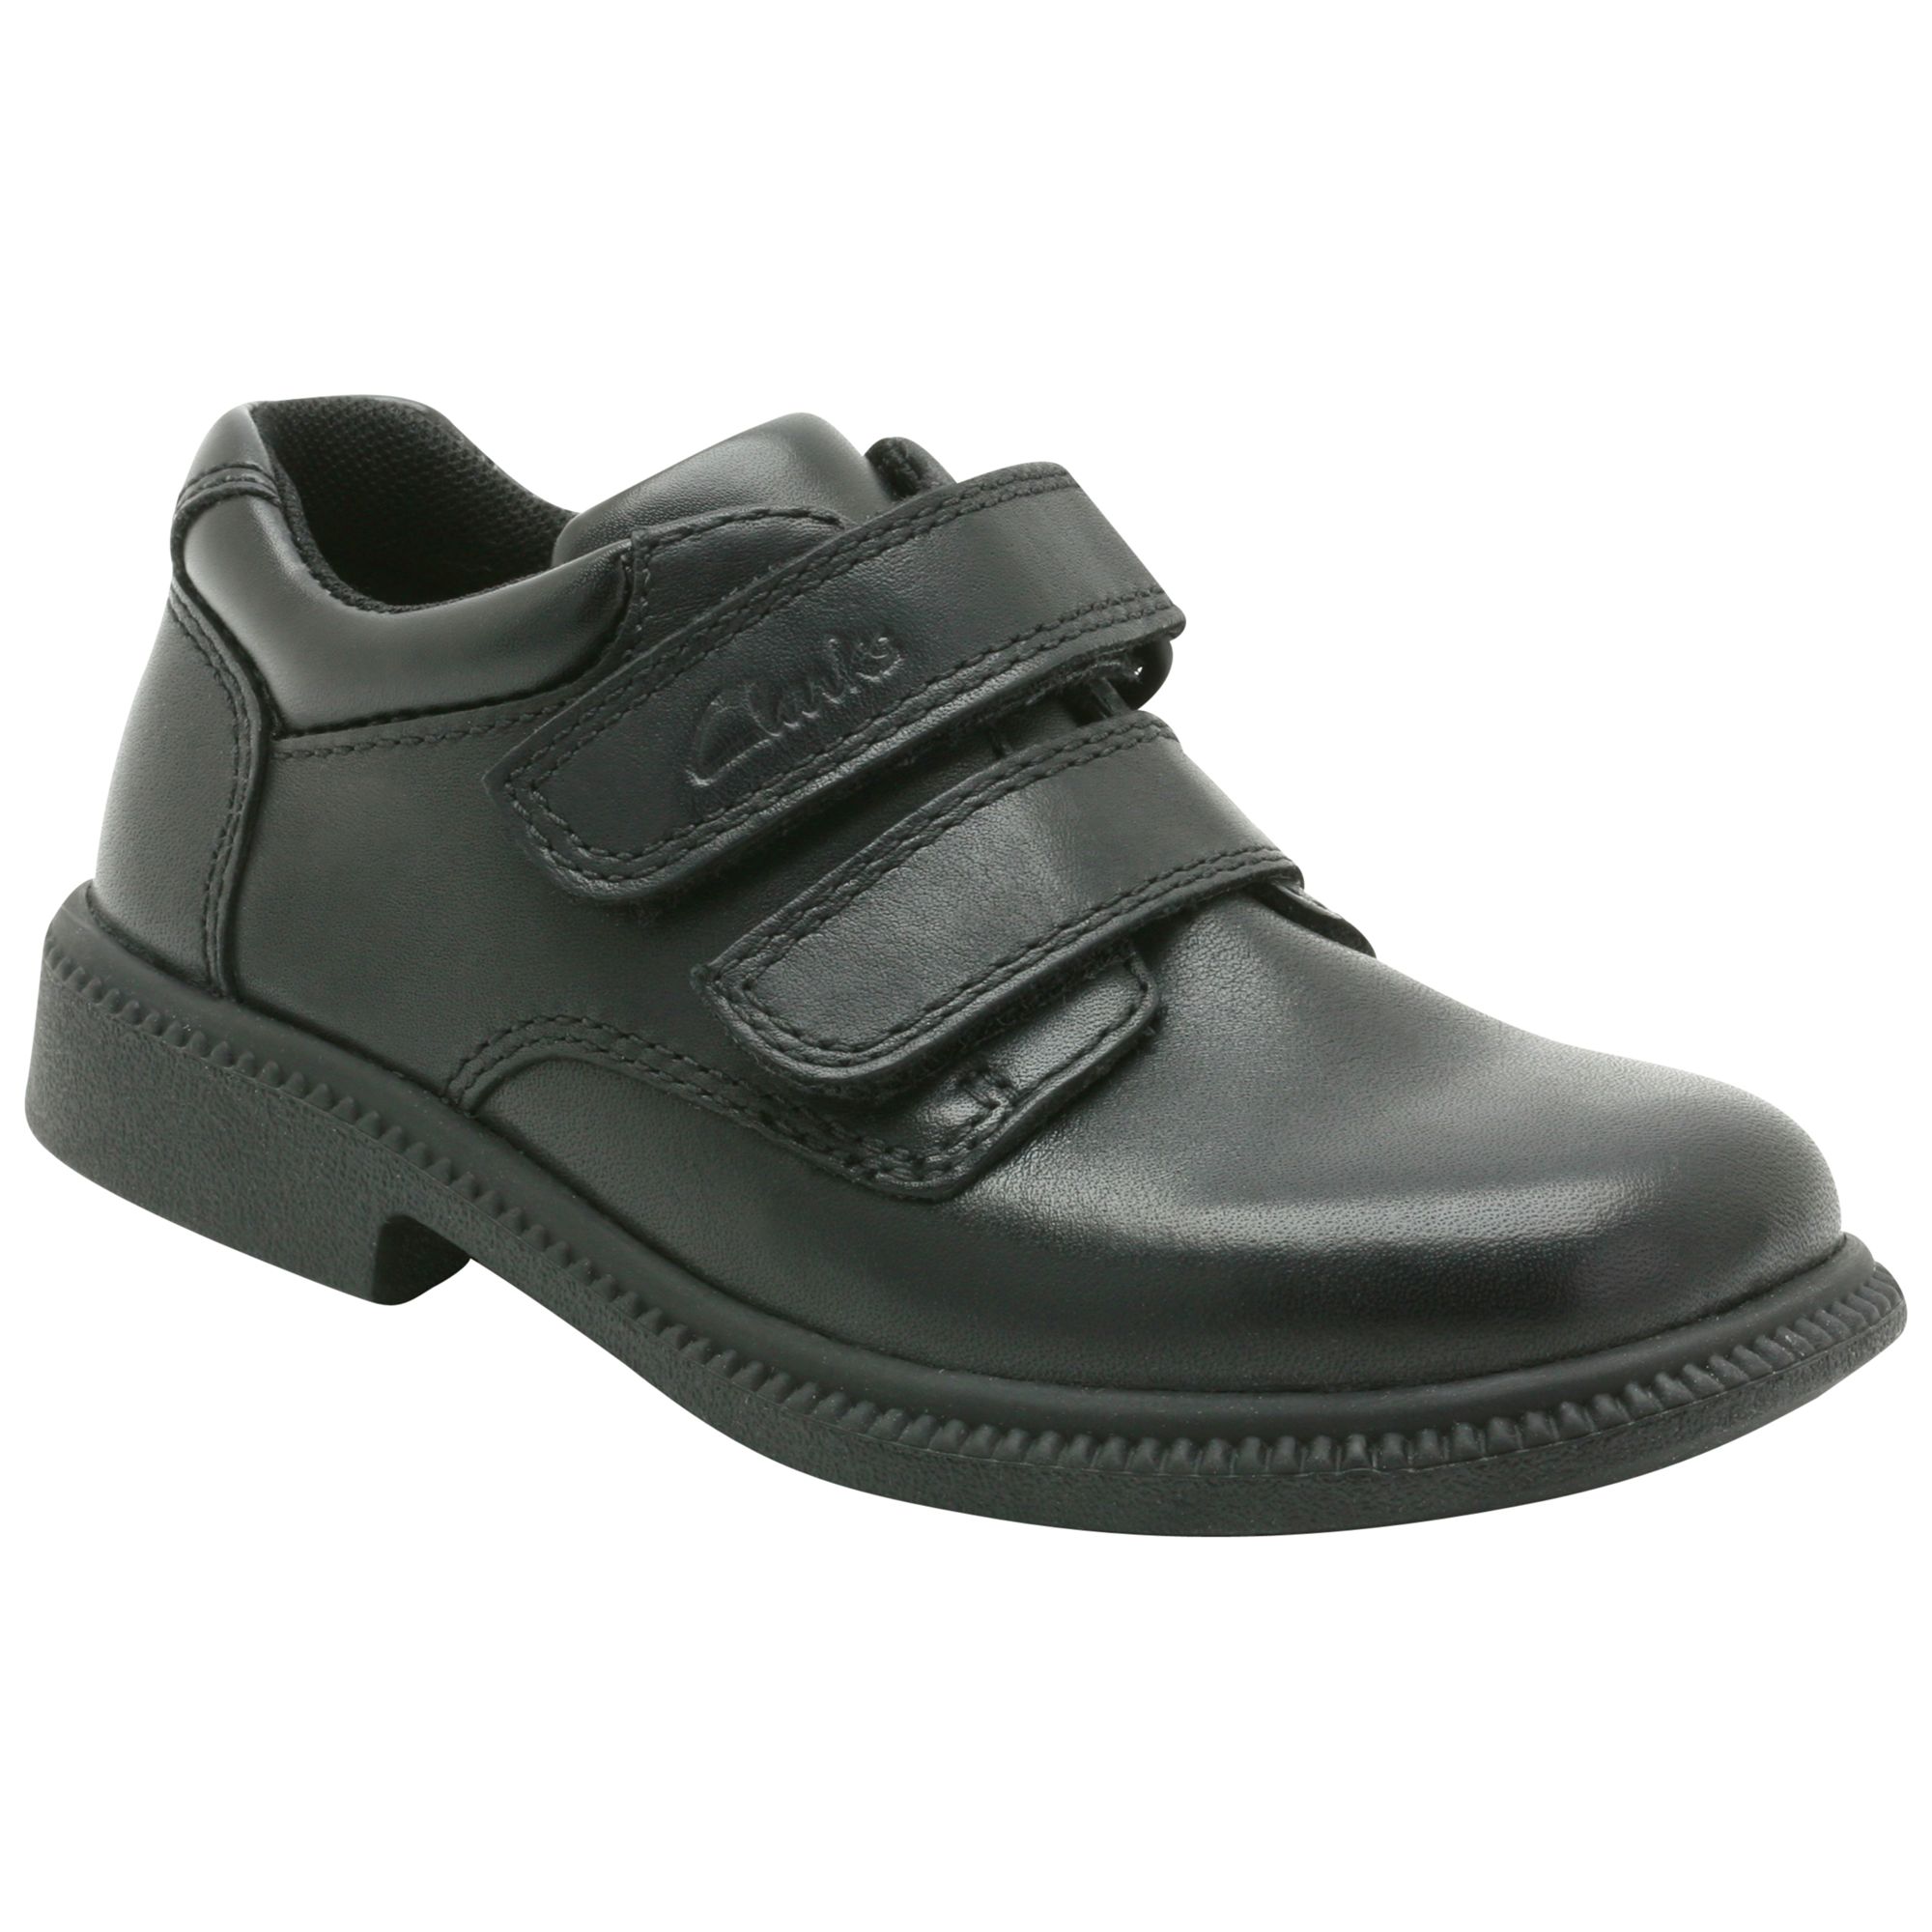 Clarks Deaton Leather Shoes, Black, 8F Jnr